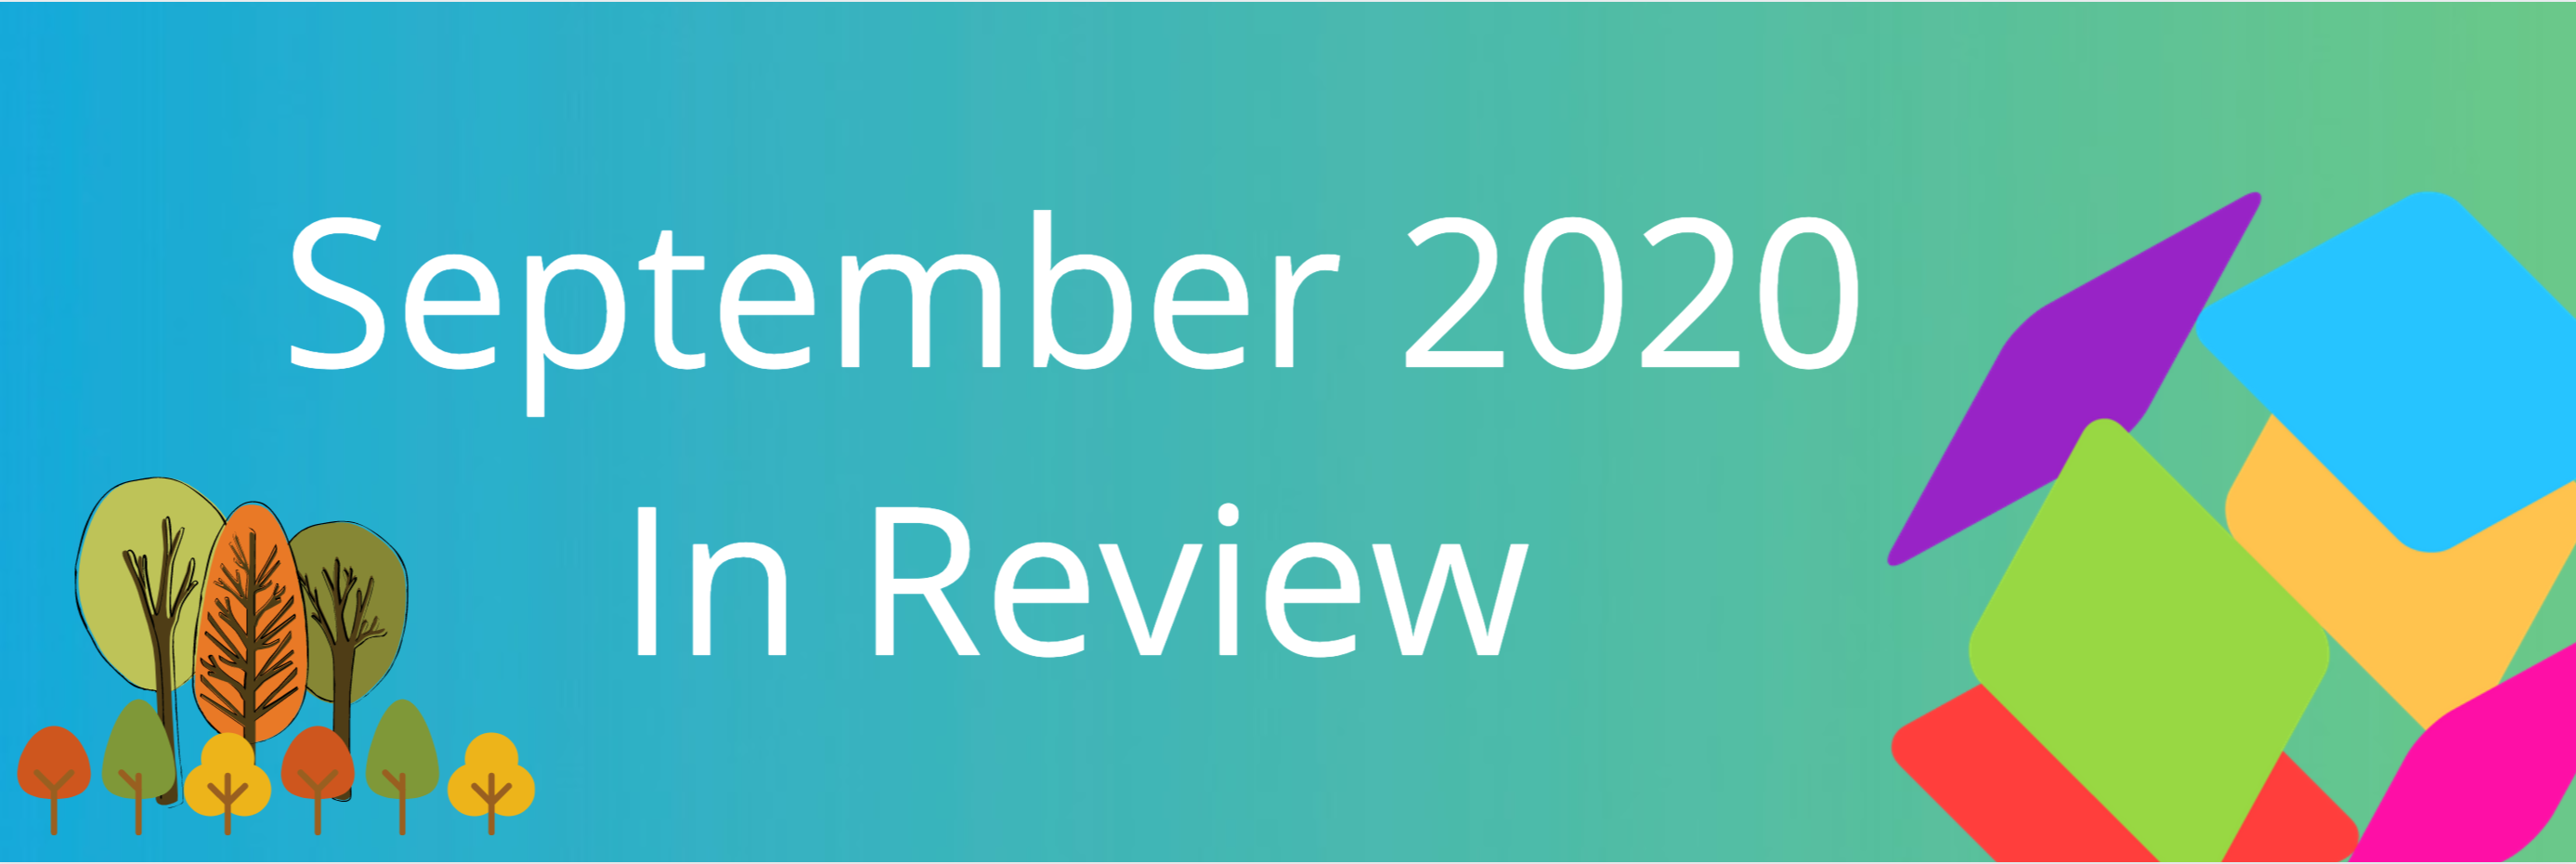 September 2020 in Review Banner